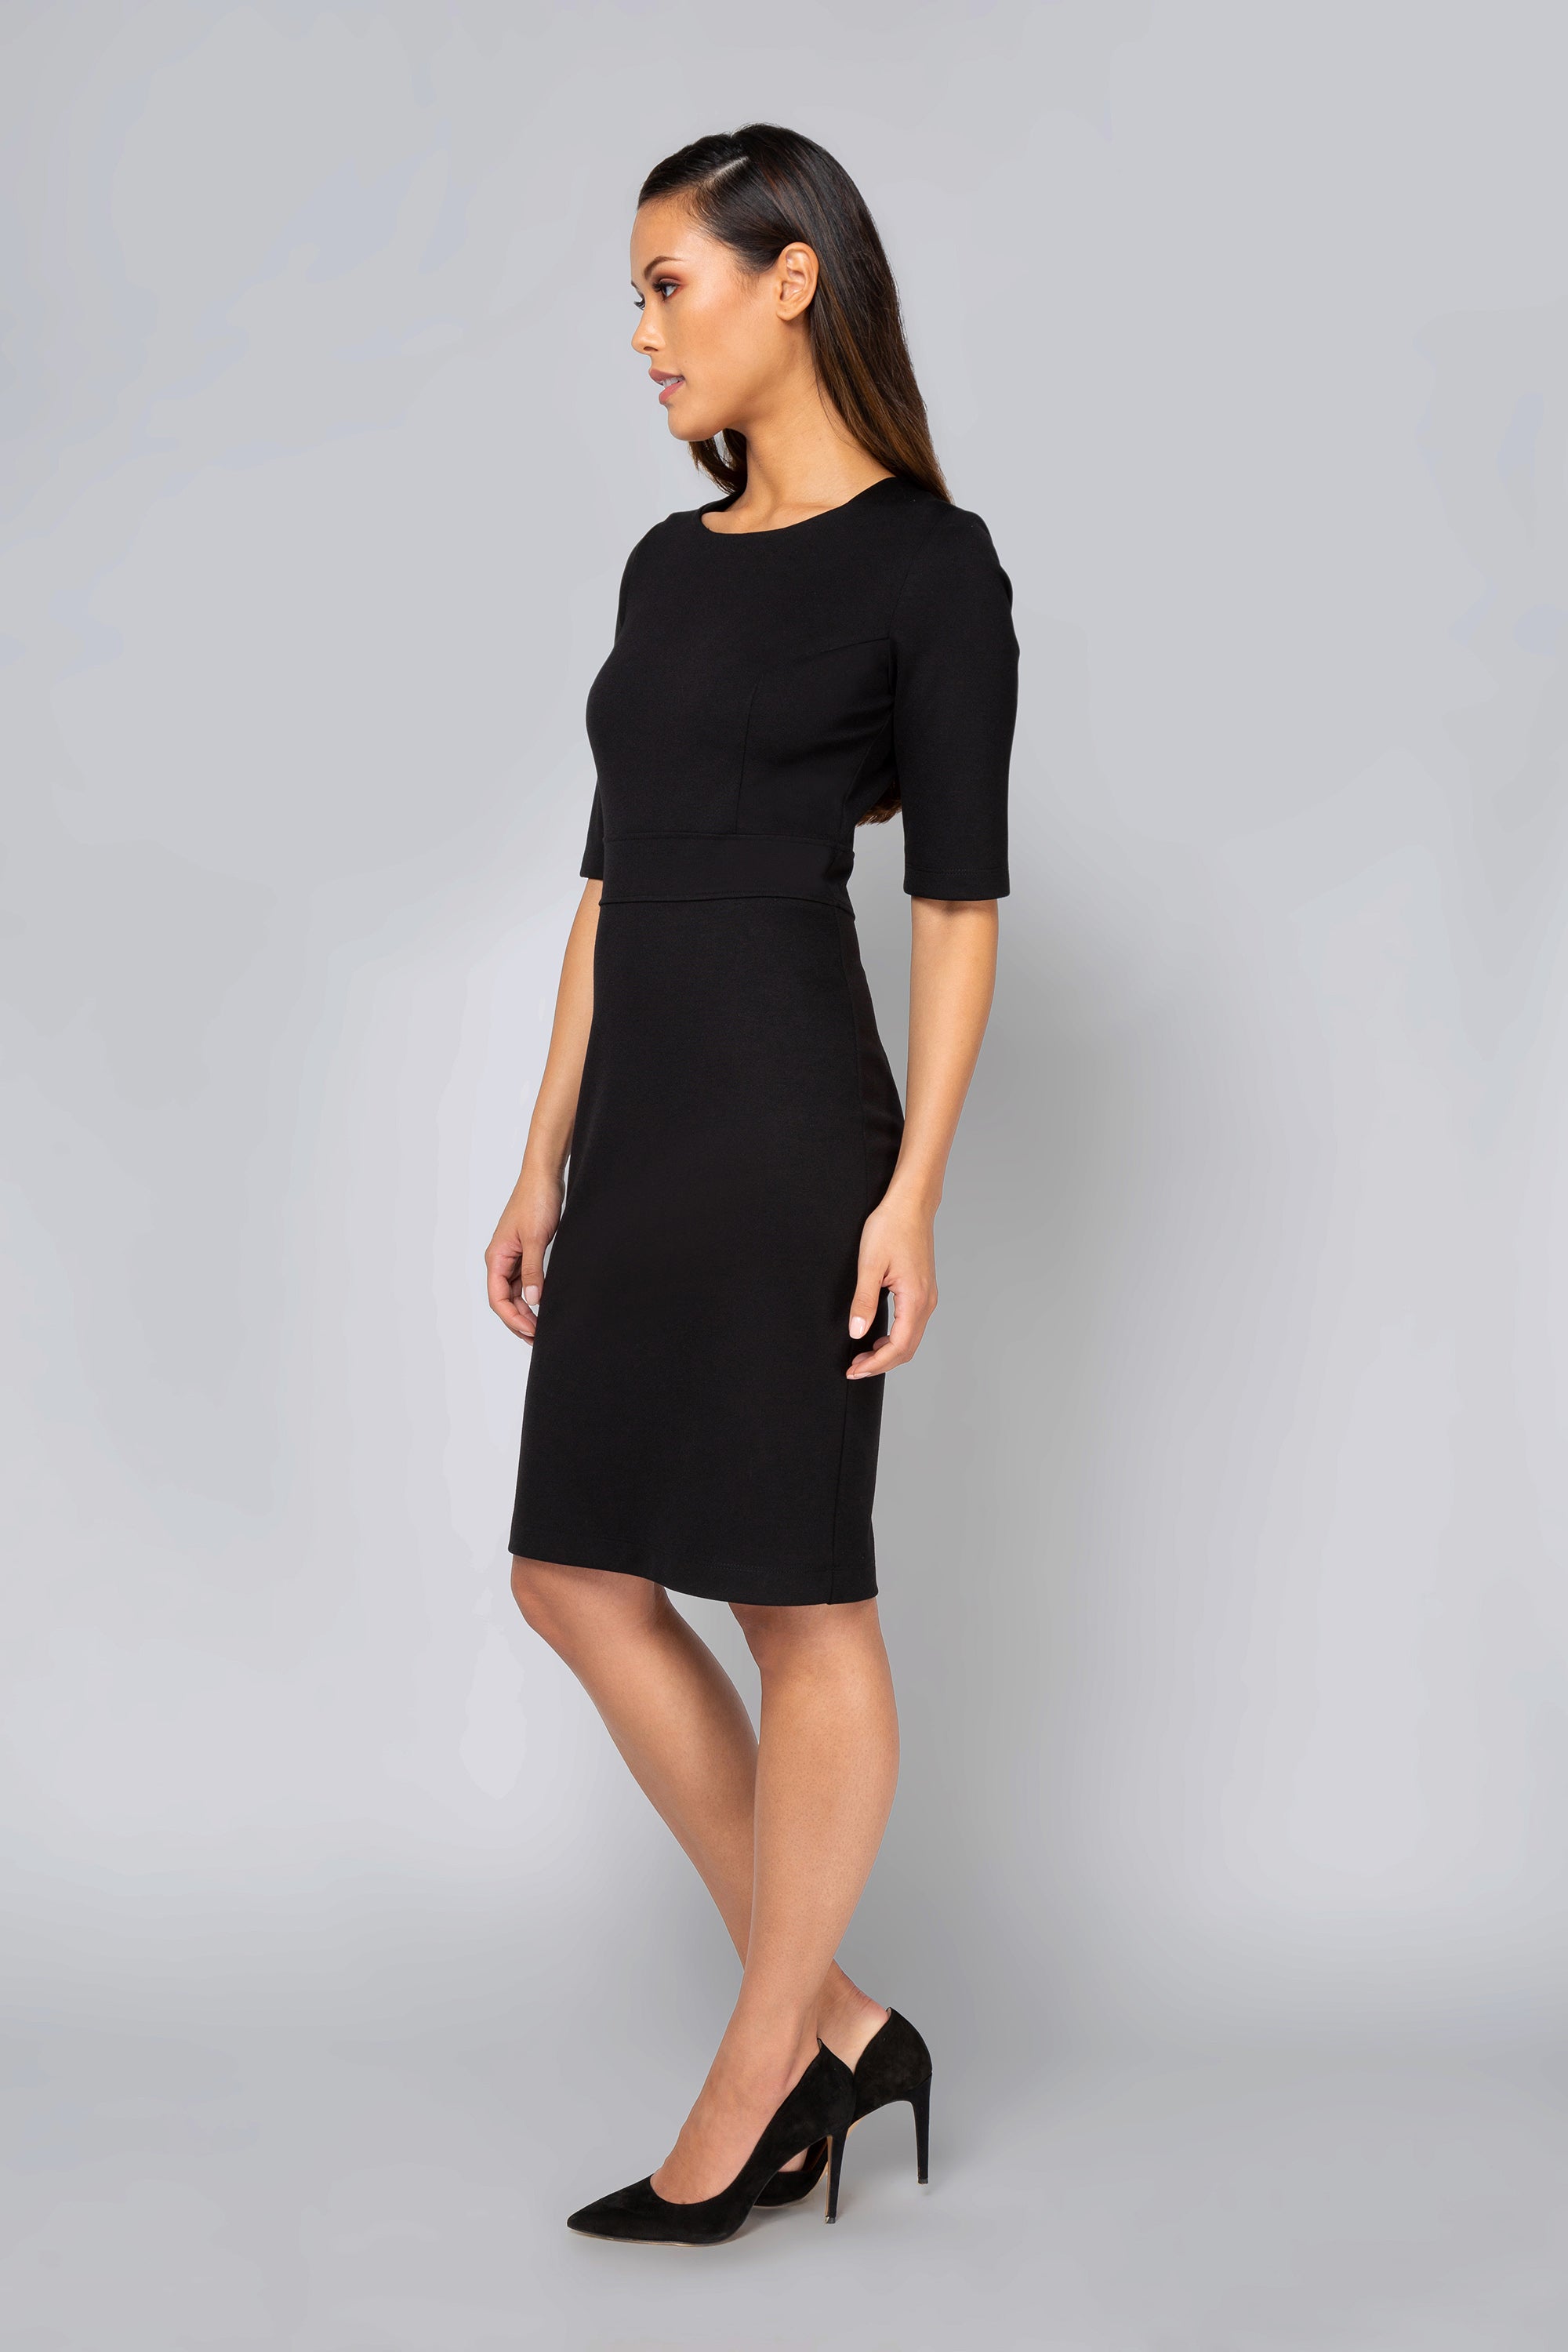 Women' Business Karyn Dress - Black NORA GARDNER | OFFICIAL STORE for work and office